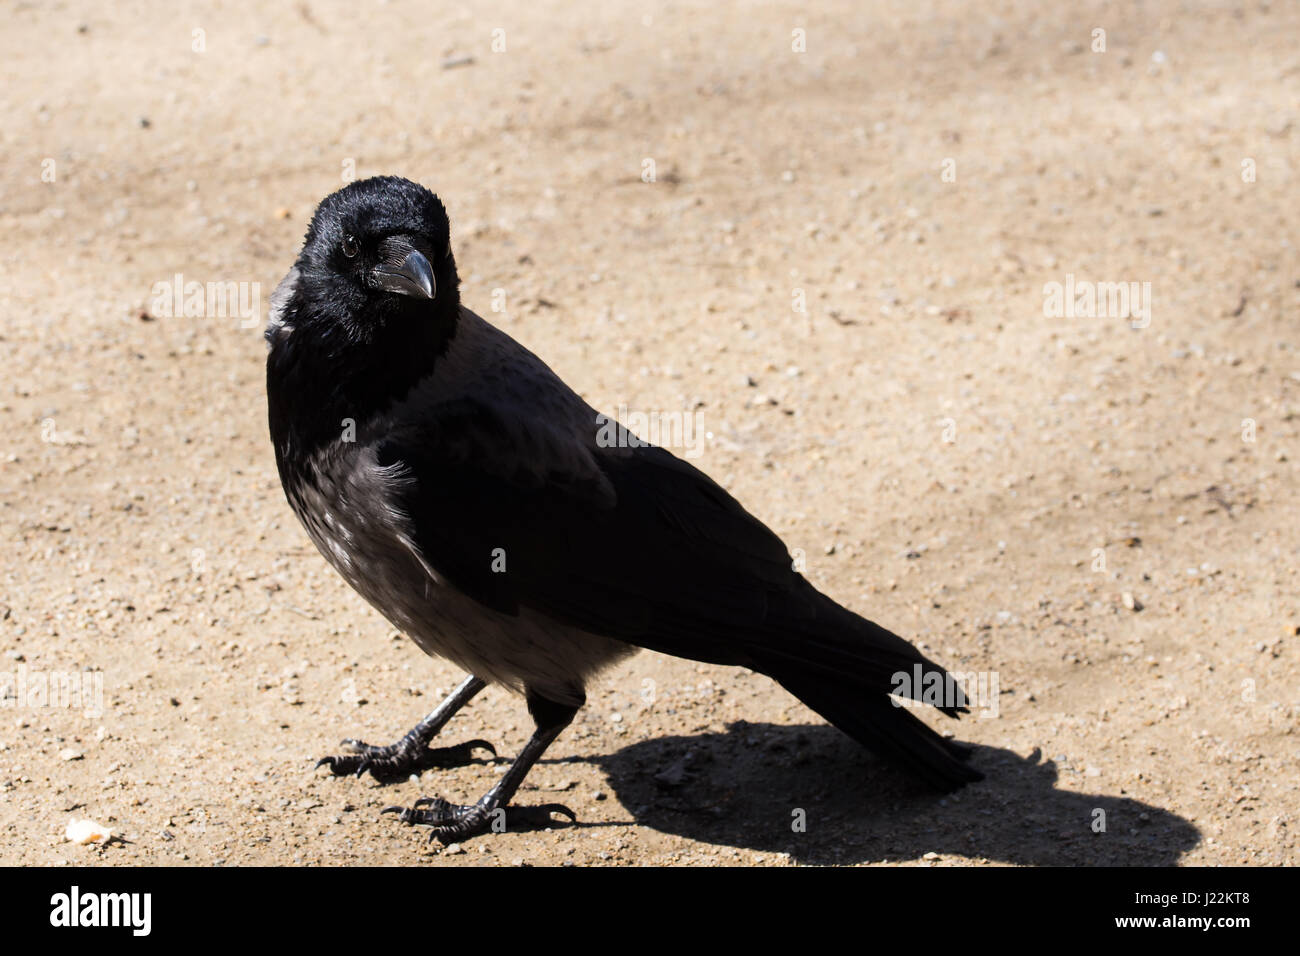 Carrion crow (Corvus corone) camminando in una giornata di sole. - Aaskrähe/Nebelkrähe (Covus corone) Foto Stock